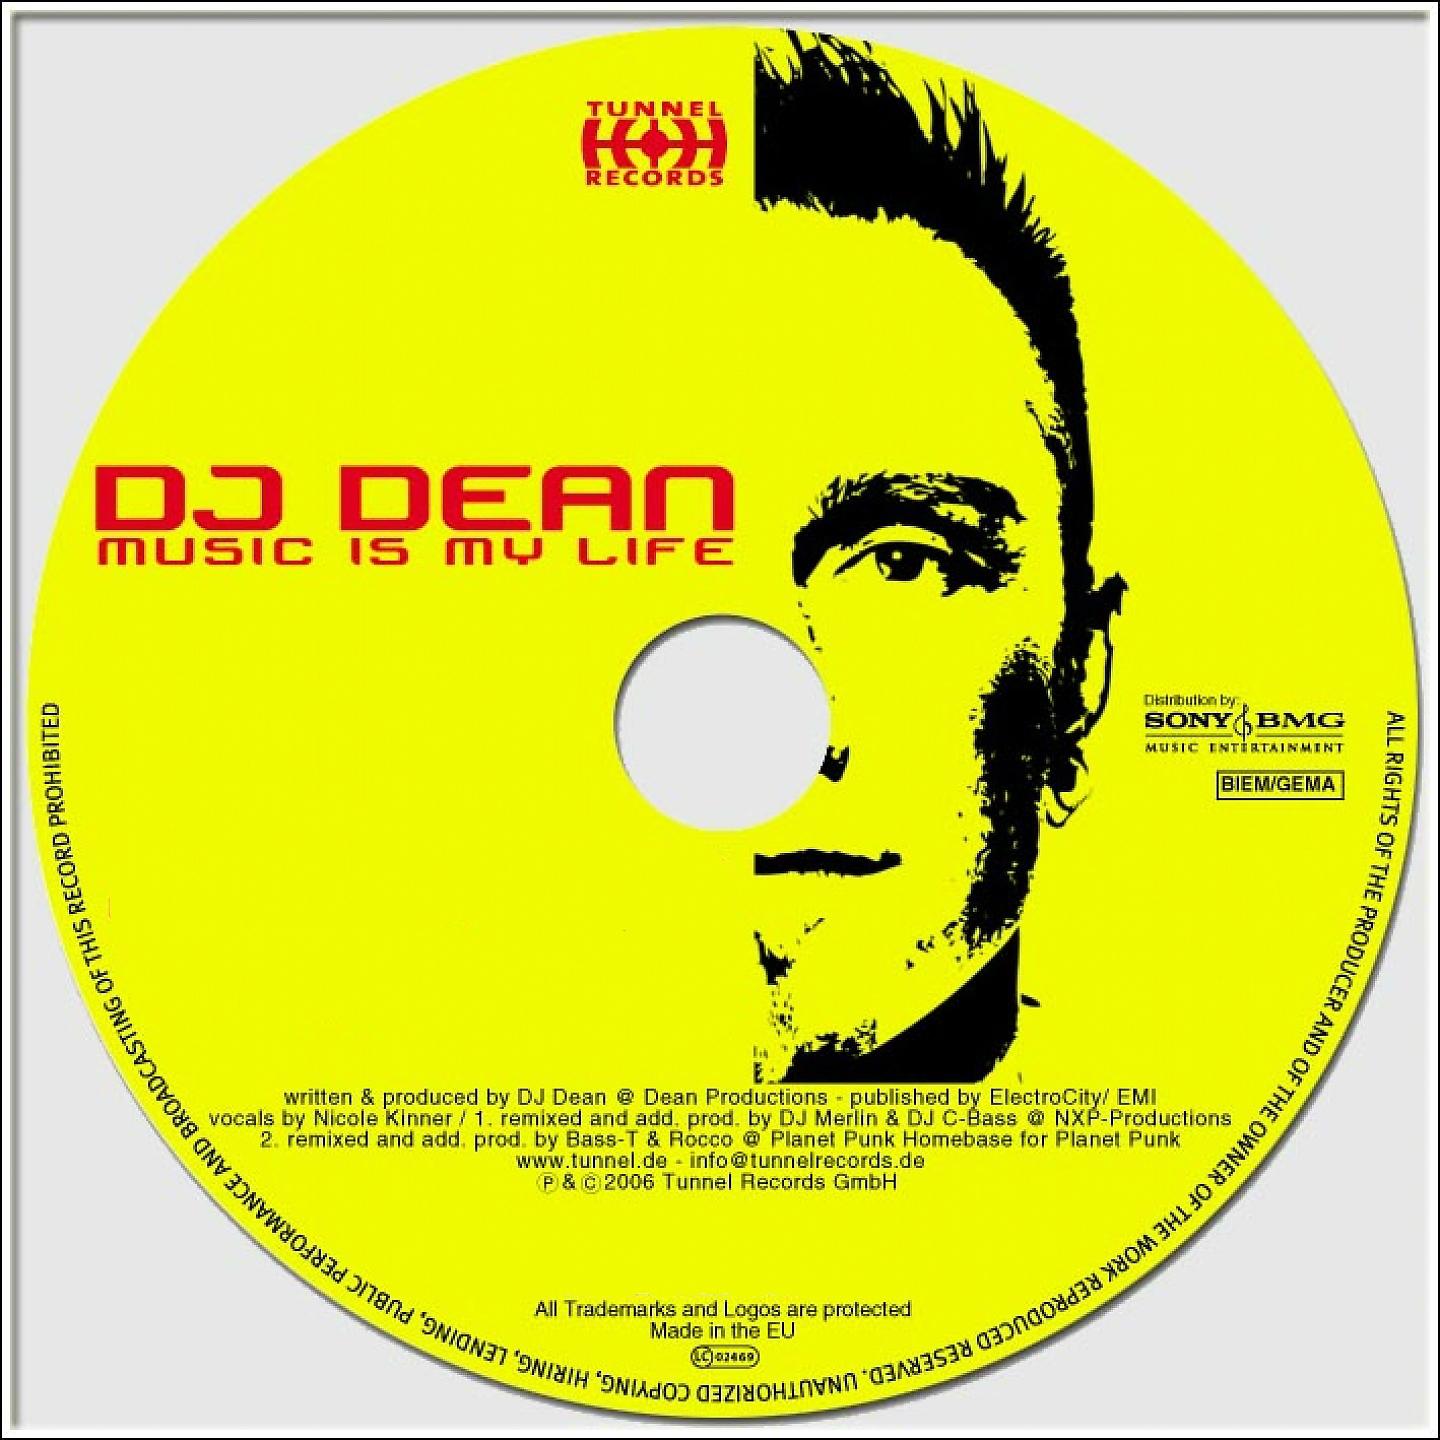 Rocco bass t. DJ Dean. DJ Dean-Home 2020. DJ Dean - protect your Ears (2003). DJ Life.